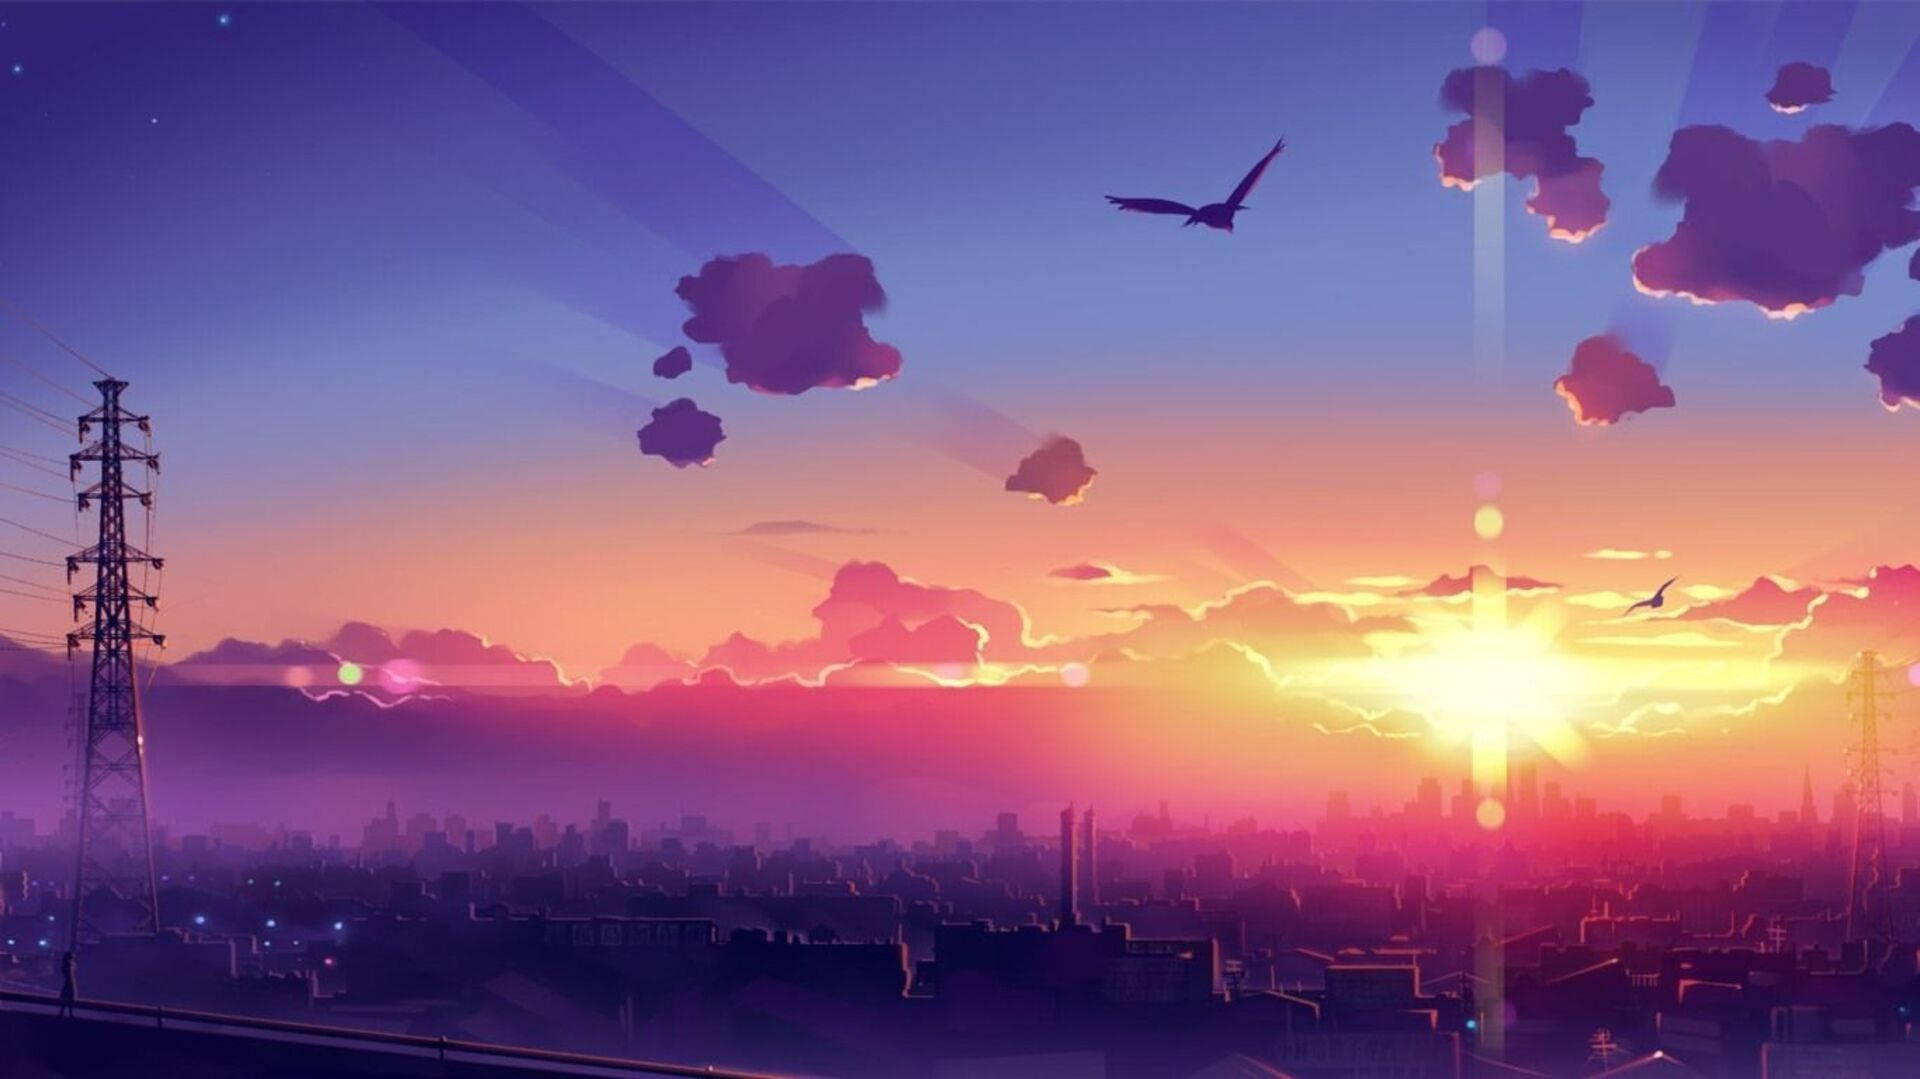 Mesmerizing Anime Aesthetic Sunset - Merging Fantasy With Reality Wallpaper